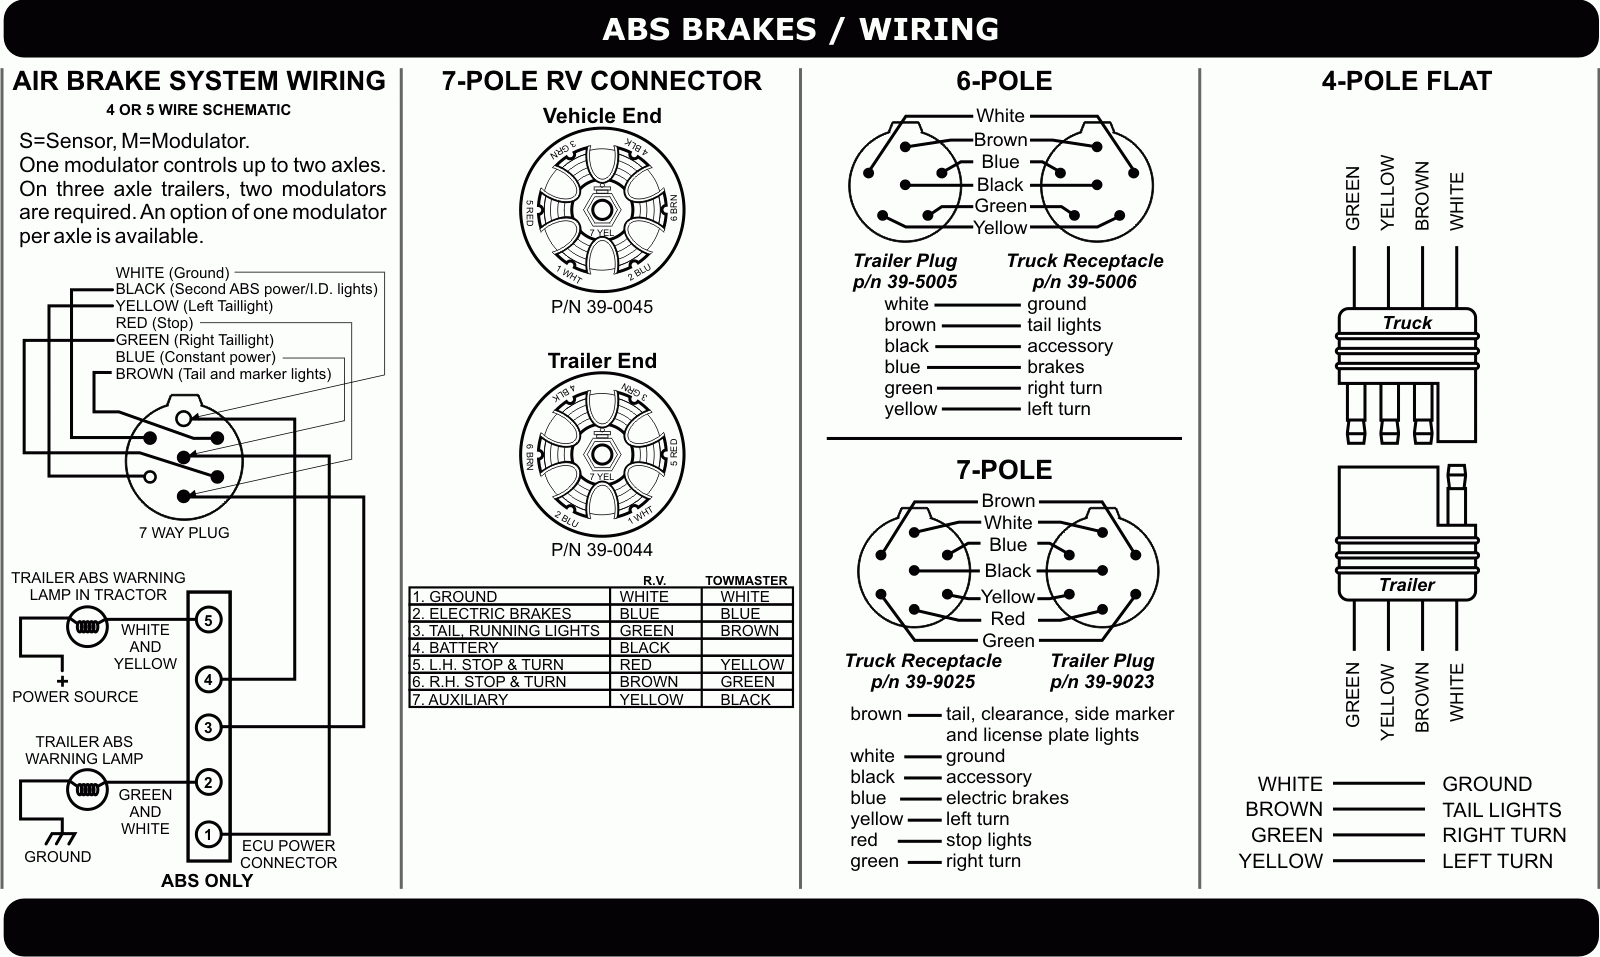 Wiring - Towmaster Trailers - Trailer Plug Wiring Diagram